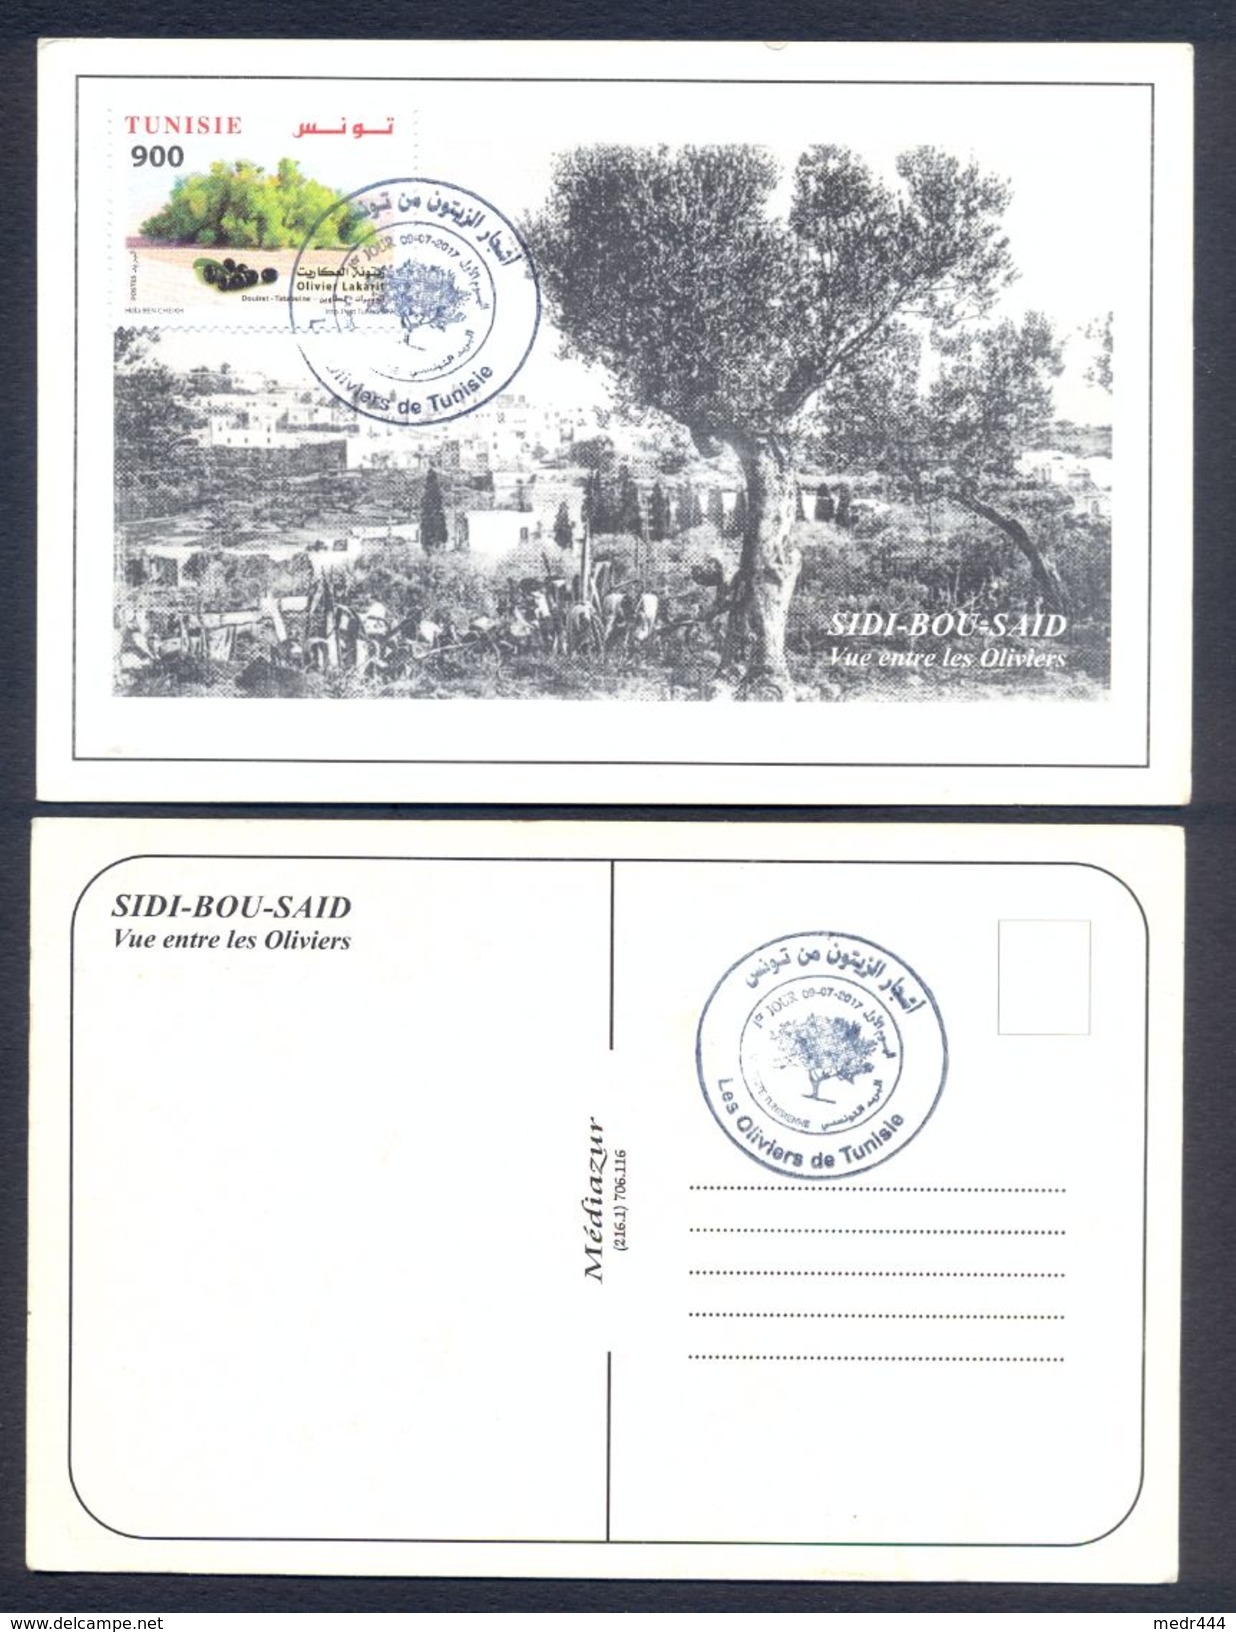 Tunisia/Tunisie 2017 - Maxi-Card - Olive Trees From Tunisia - MNH** Excellent Quality - Tunisia